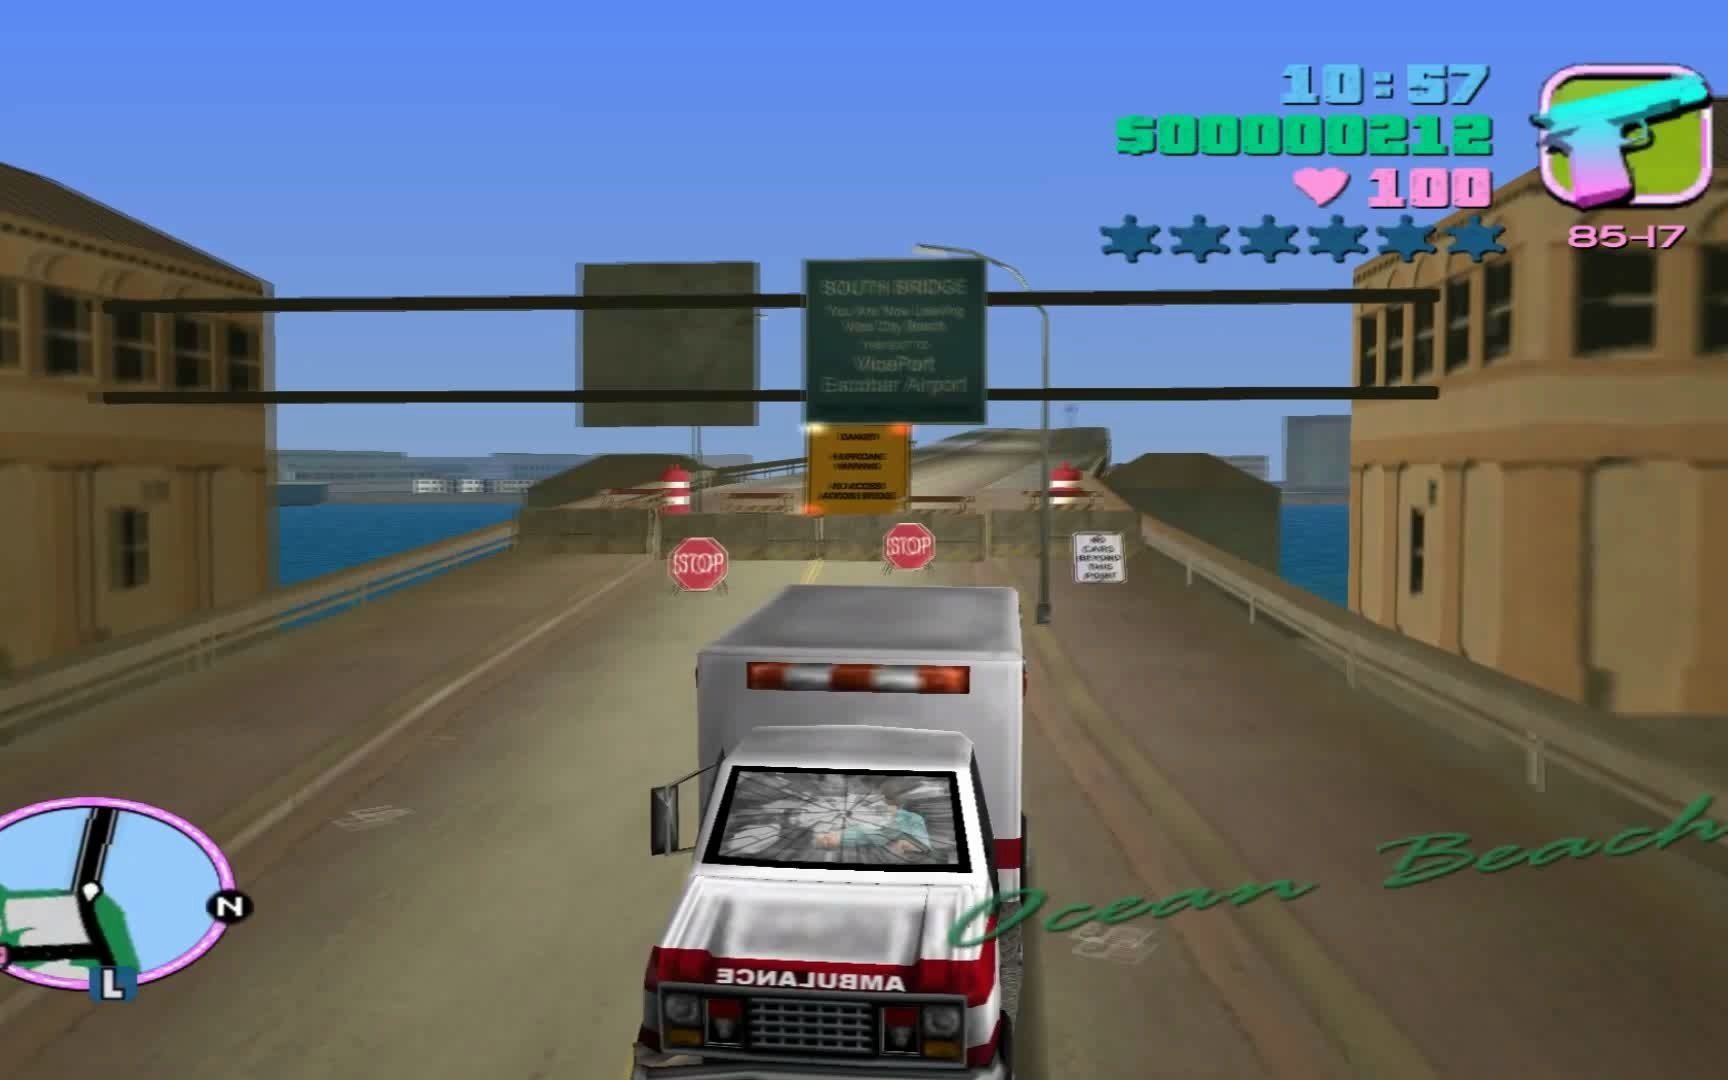 GTA罪惡都市中分割兩邊地圖的數個橋上存在空氣牆，配合主角溶於水的特性，限制了玩家的可達性